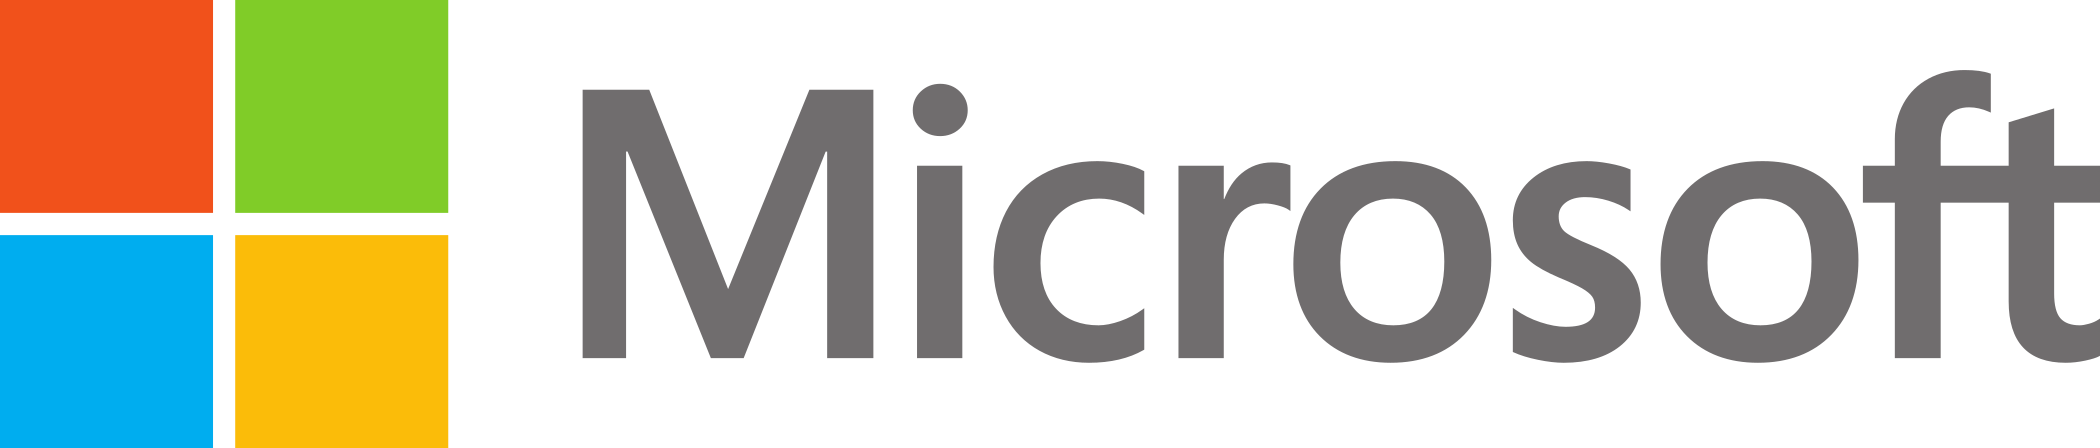 microsoft logo 2 - Microsoft Logo